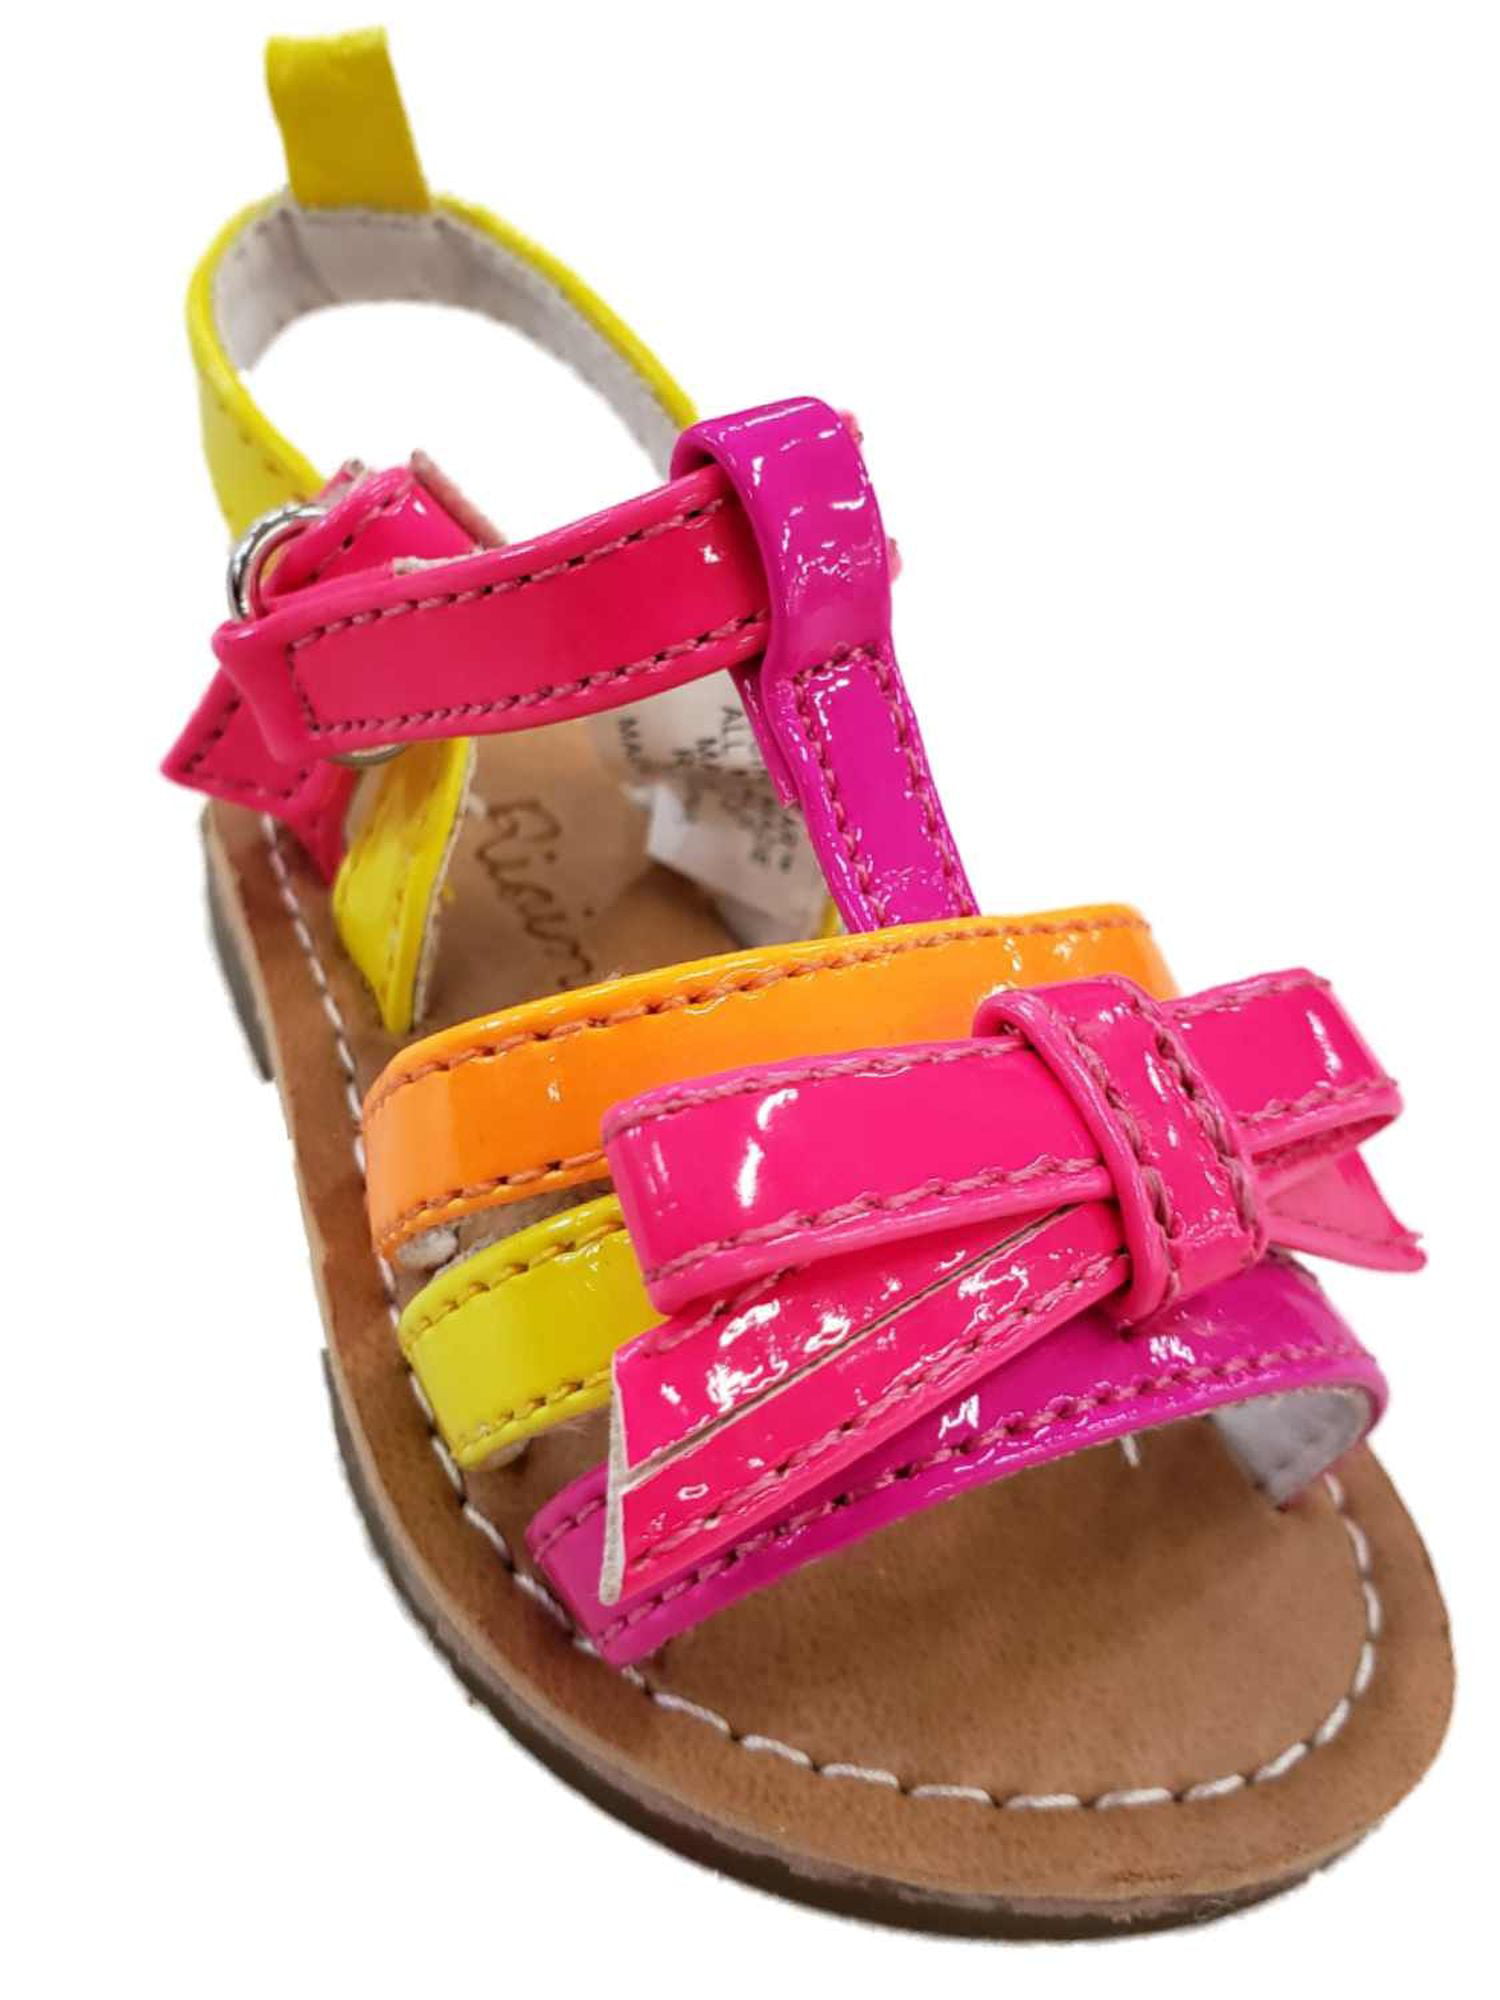 Infant Baby Girls PINK OPEN TOE SANDALS Foam Rubber FLOWERS Ankle Strap SIZE 2 